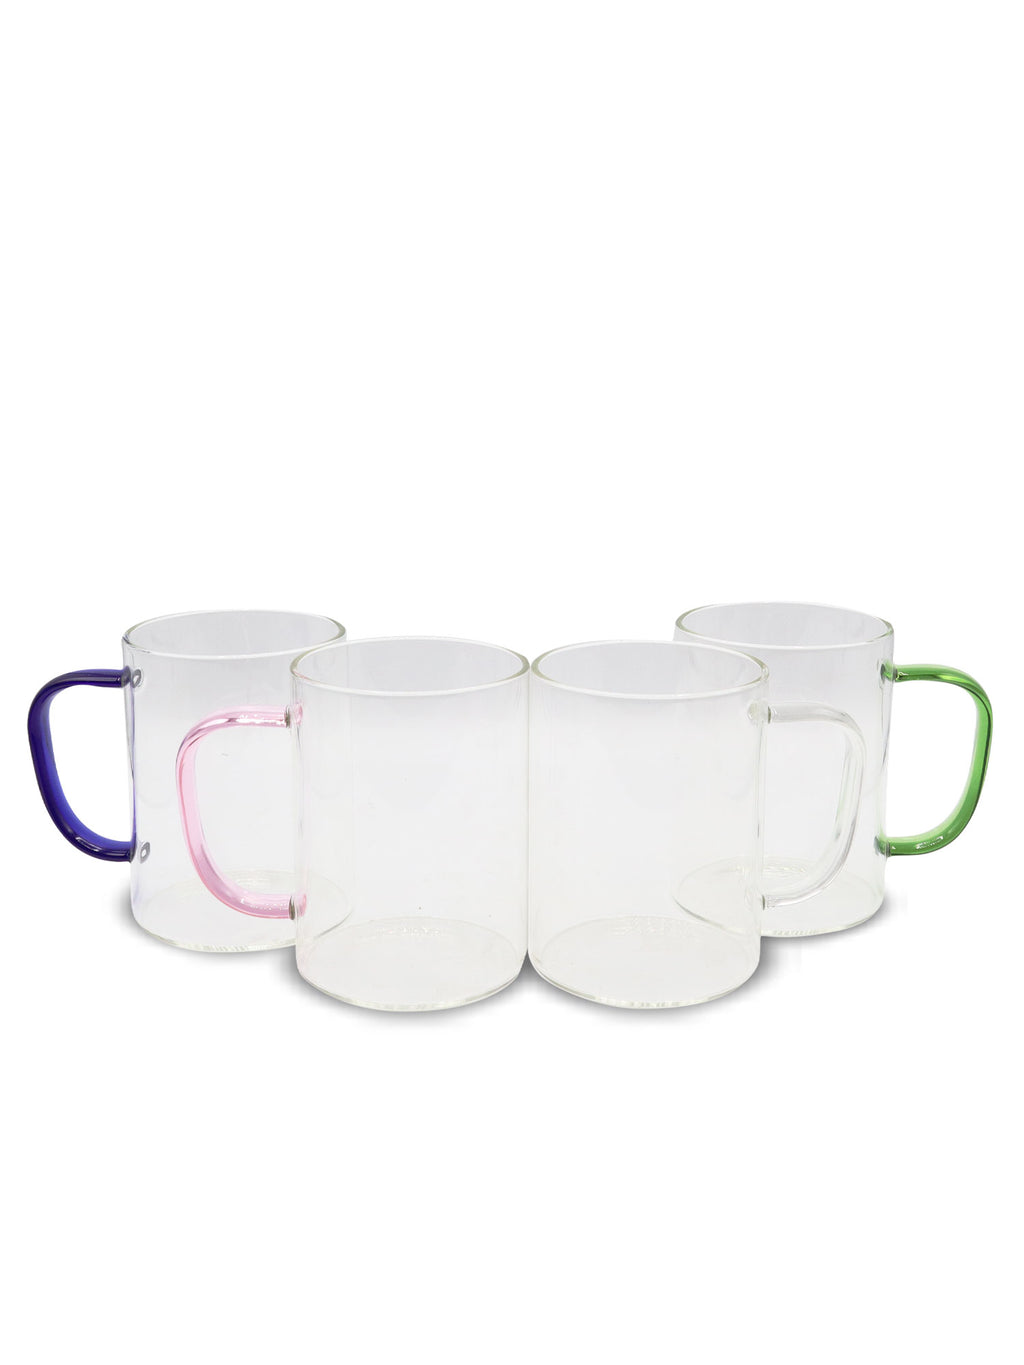 15oz-sublimation-glass-mug-frosted-the-tumbler-company